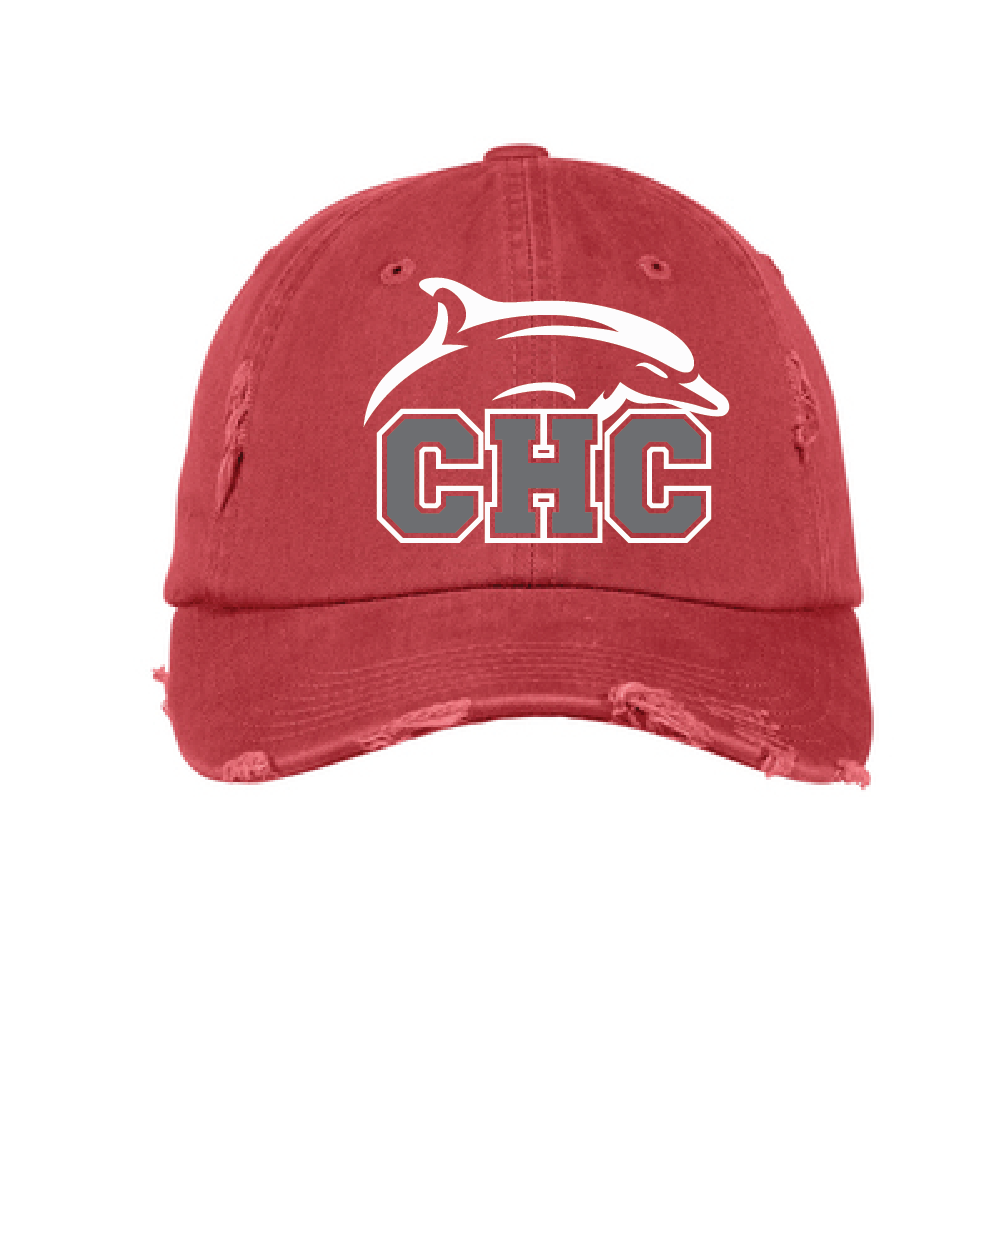 Distressed Cap / Dashing Red / Cape Henry Collegiate Lacrosse